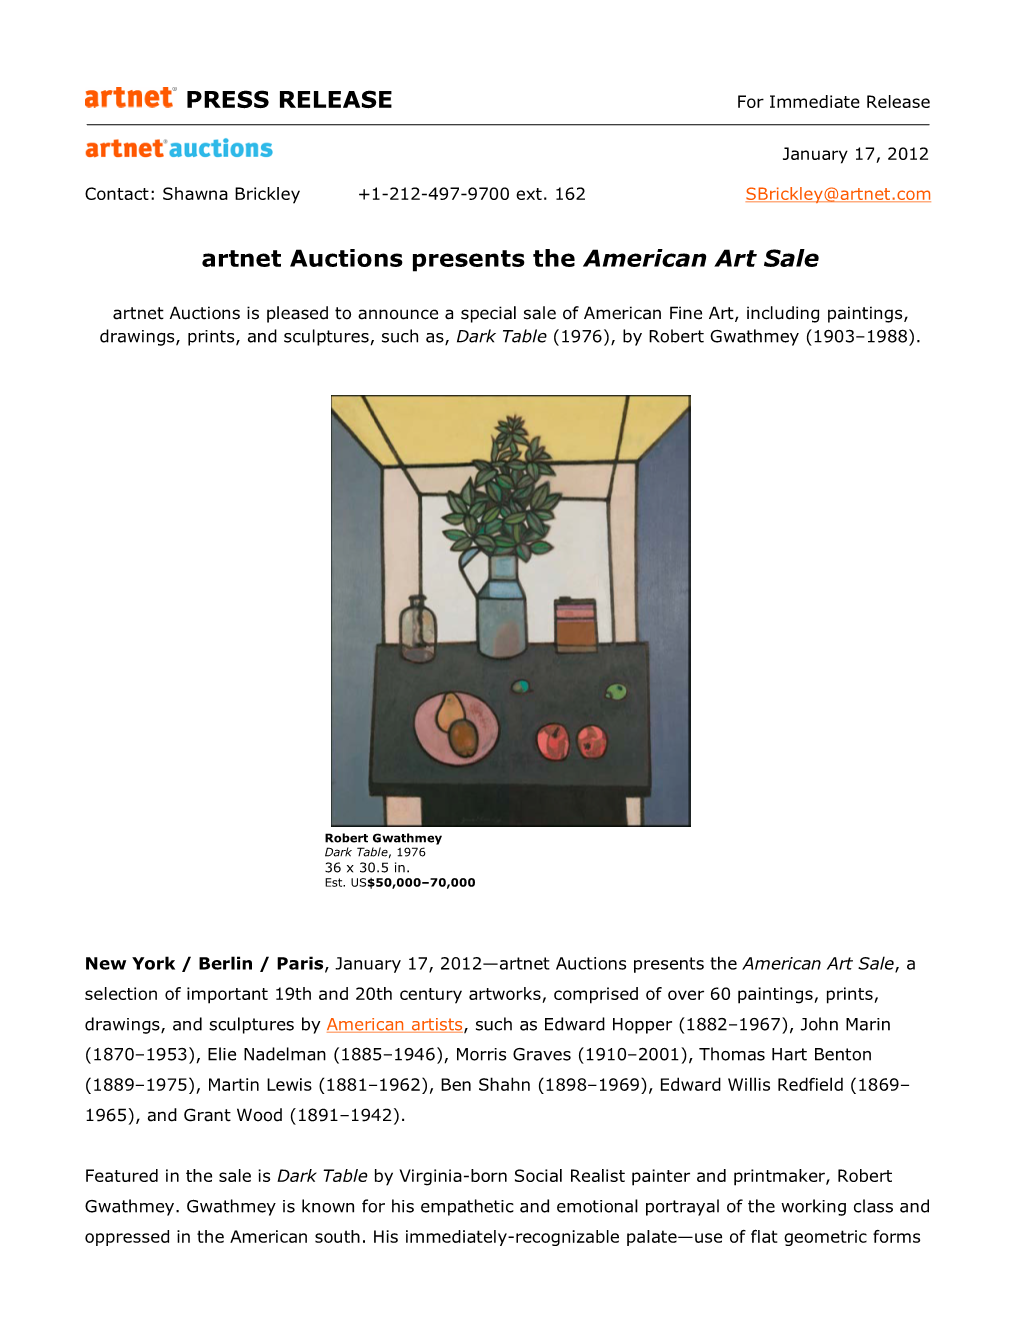 American Art Sale